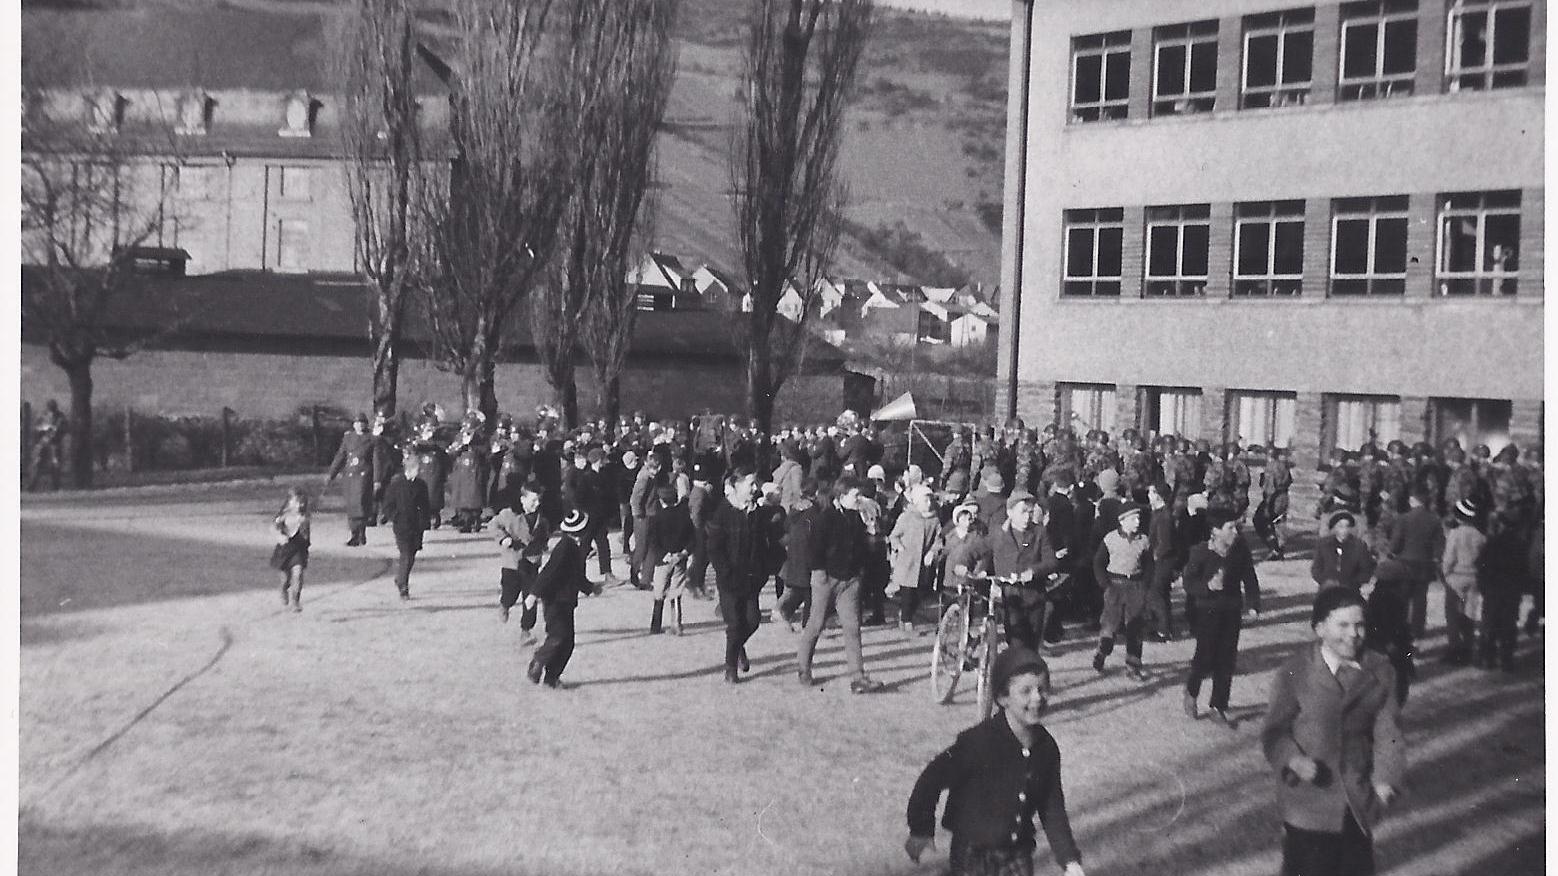 School yard around 1960